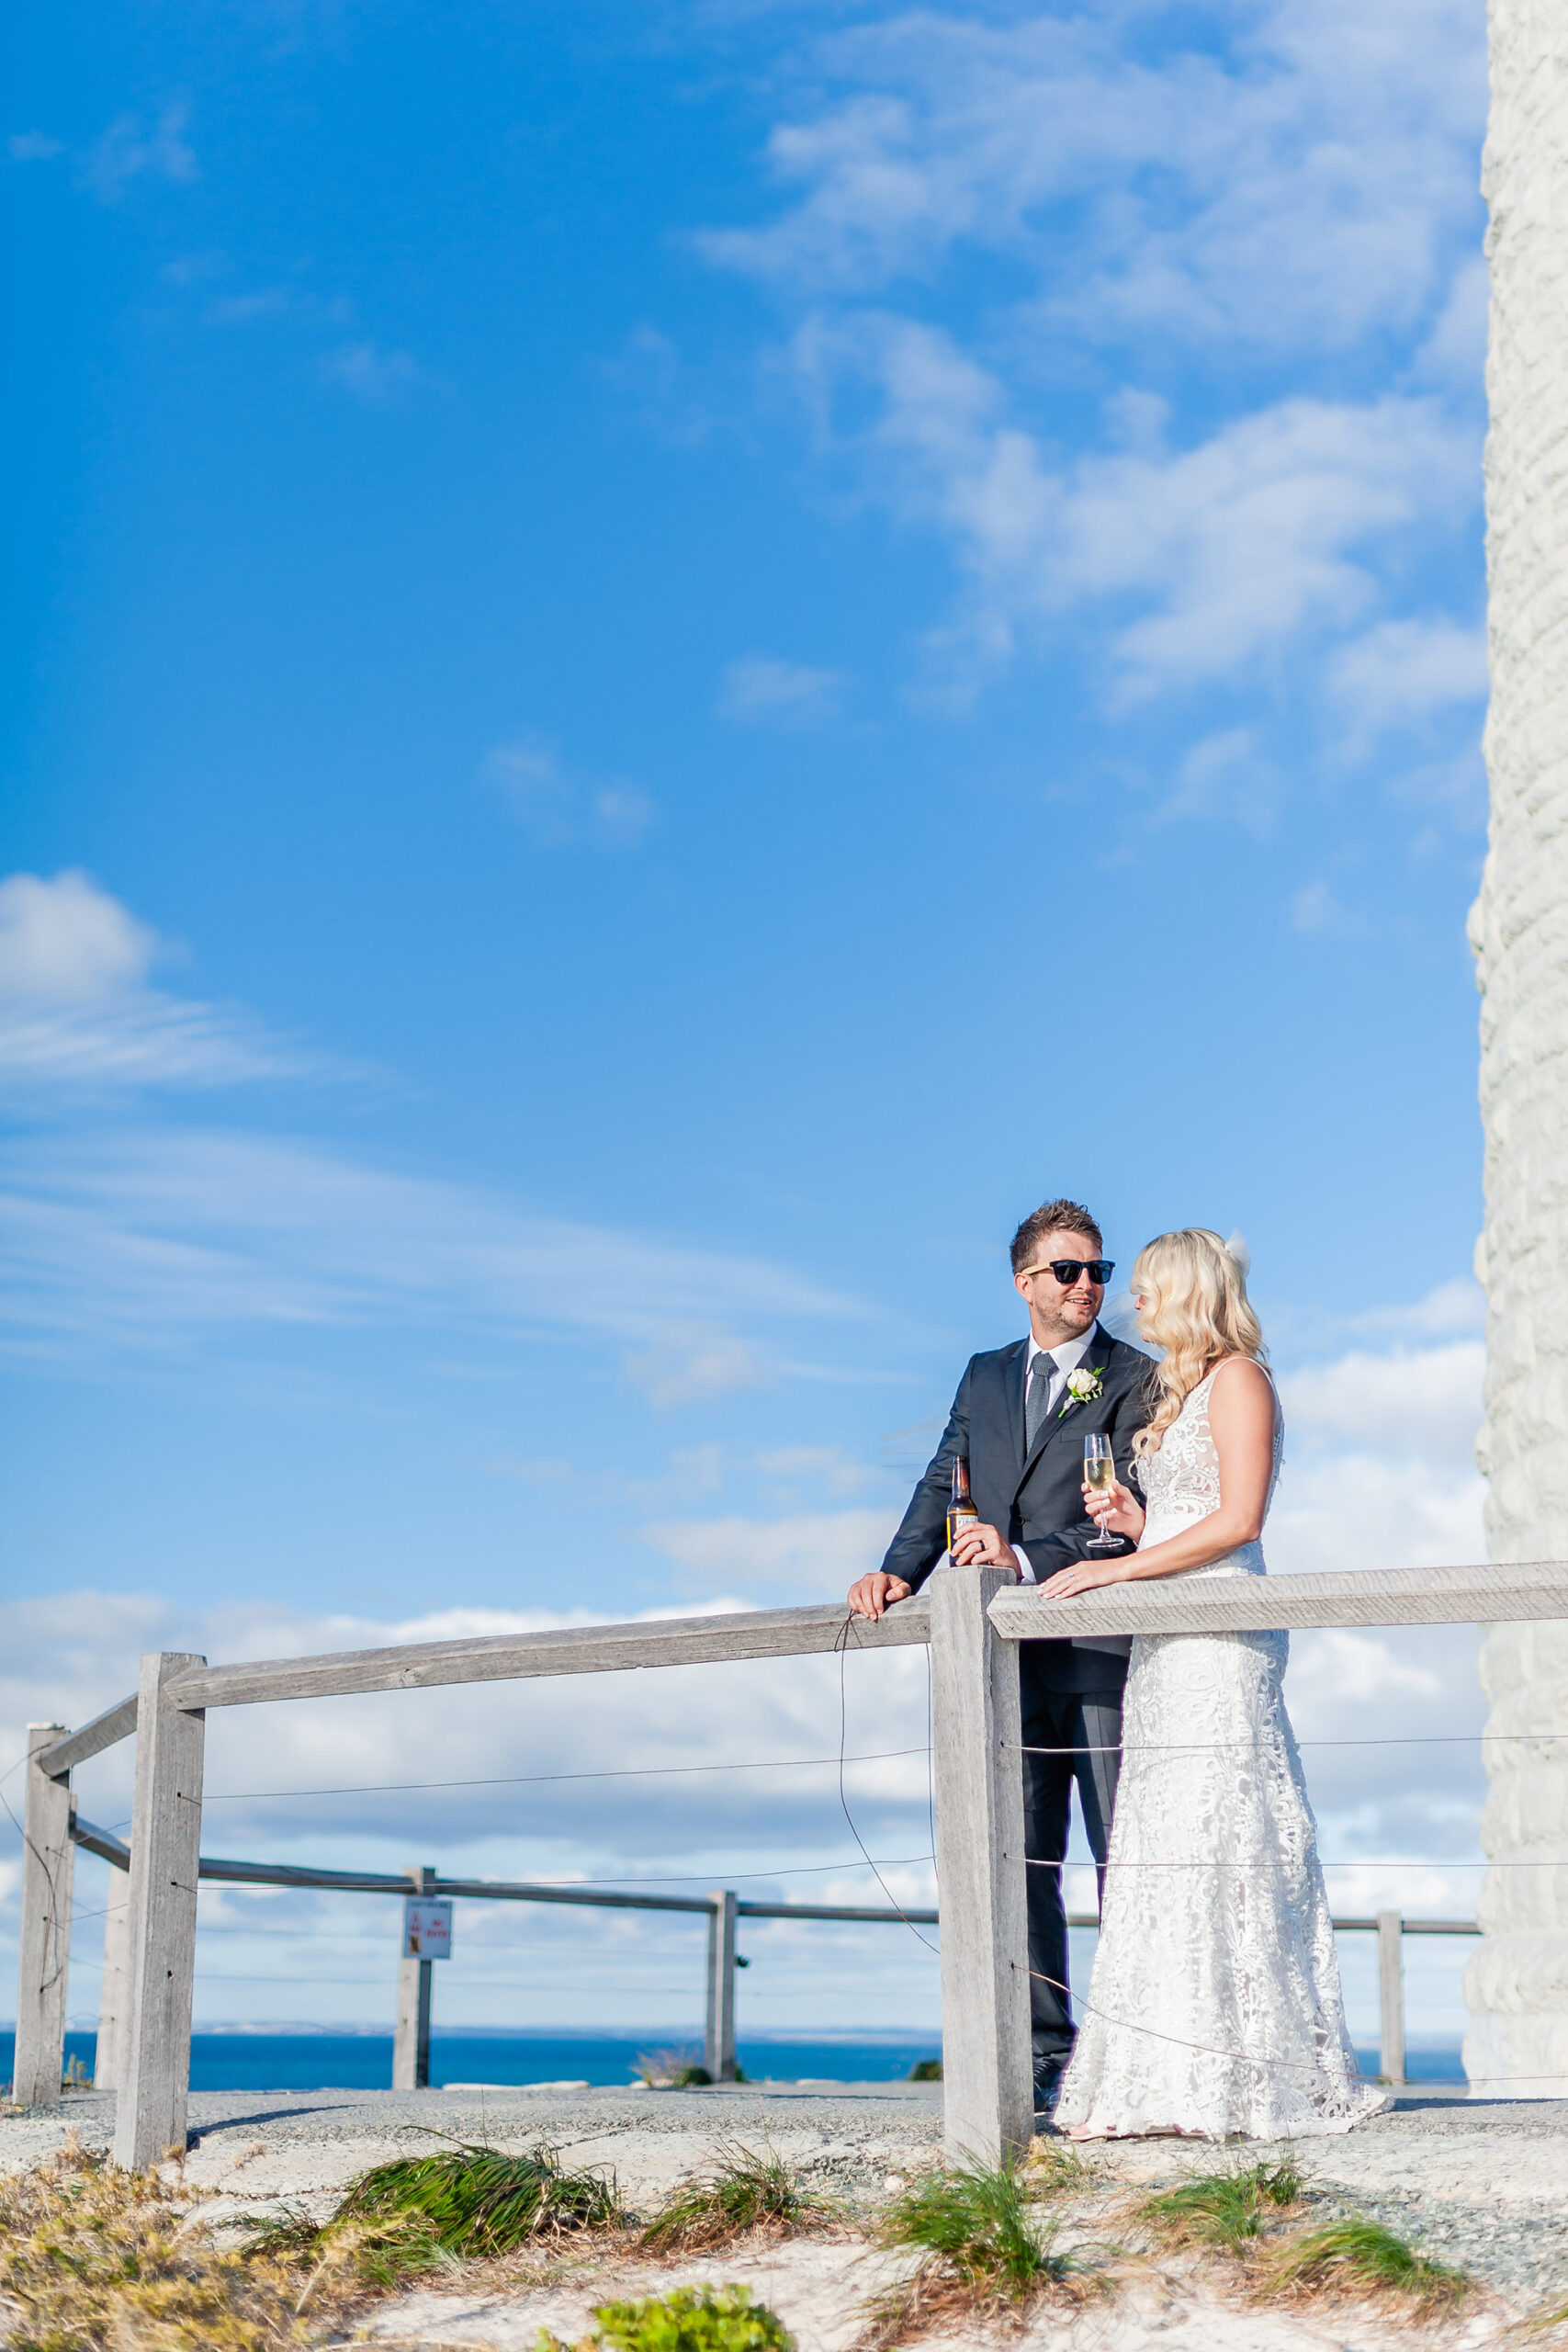 Kieta Trent Classic Beach Wedding OMKG Photography SBS 024 scaled